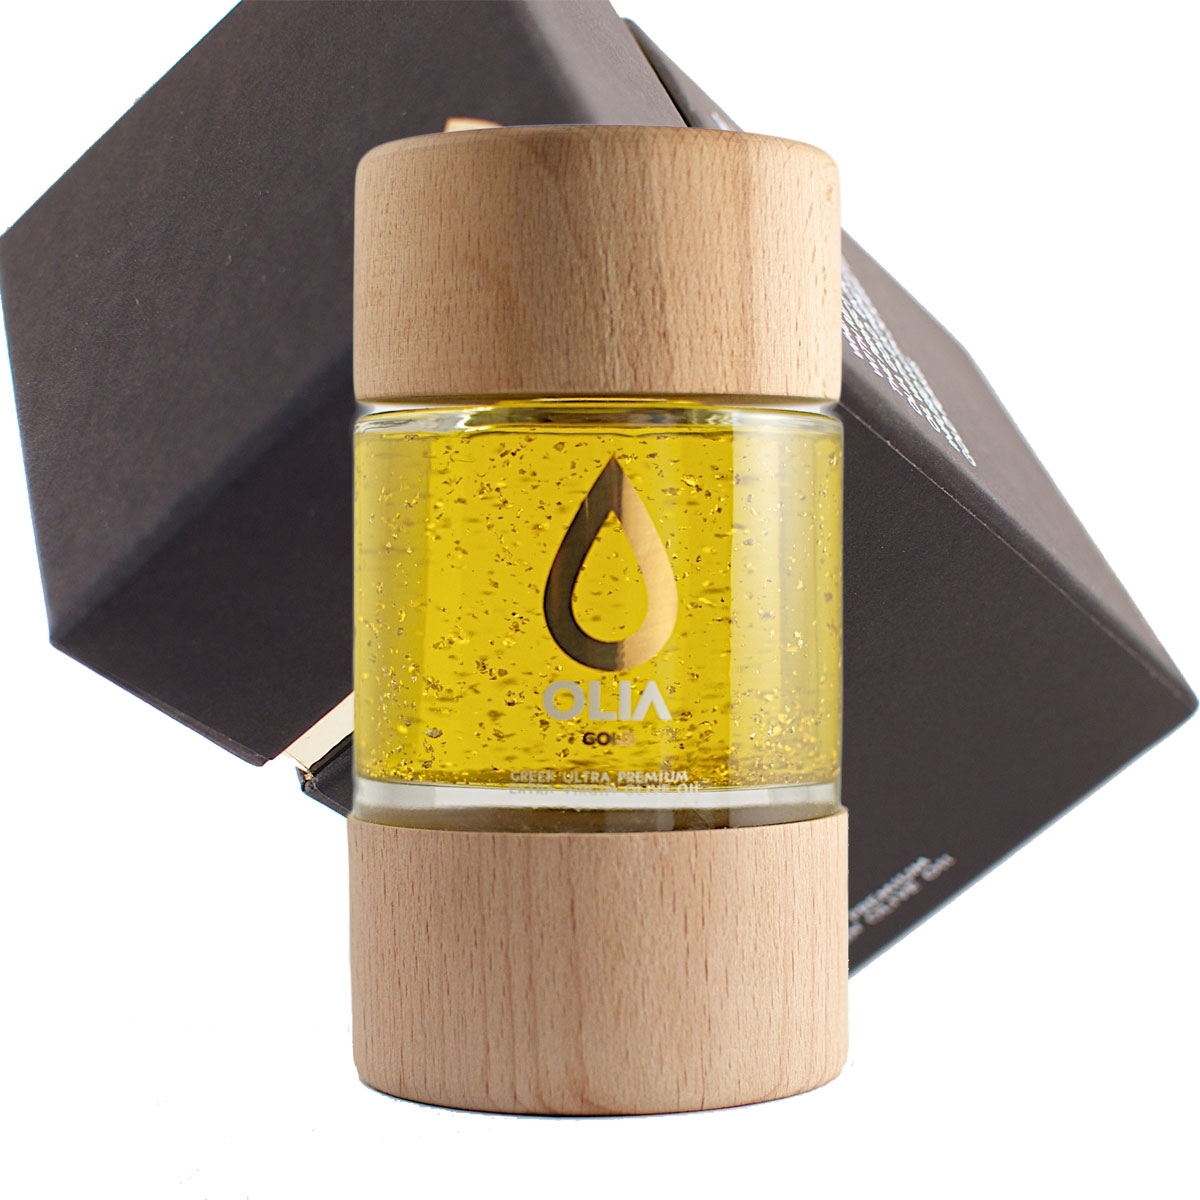 OLIA Gold Edition 24K - Extra Virgin Olive Oil.